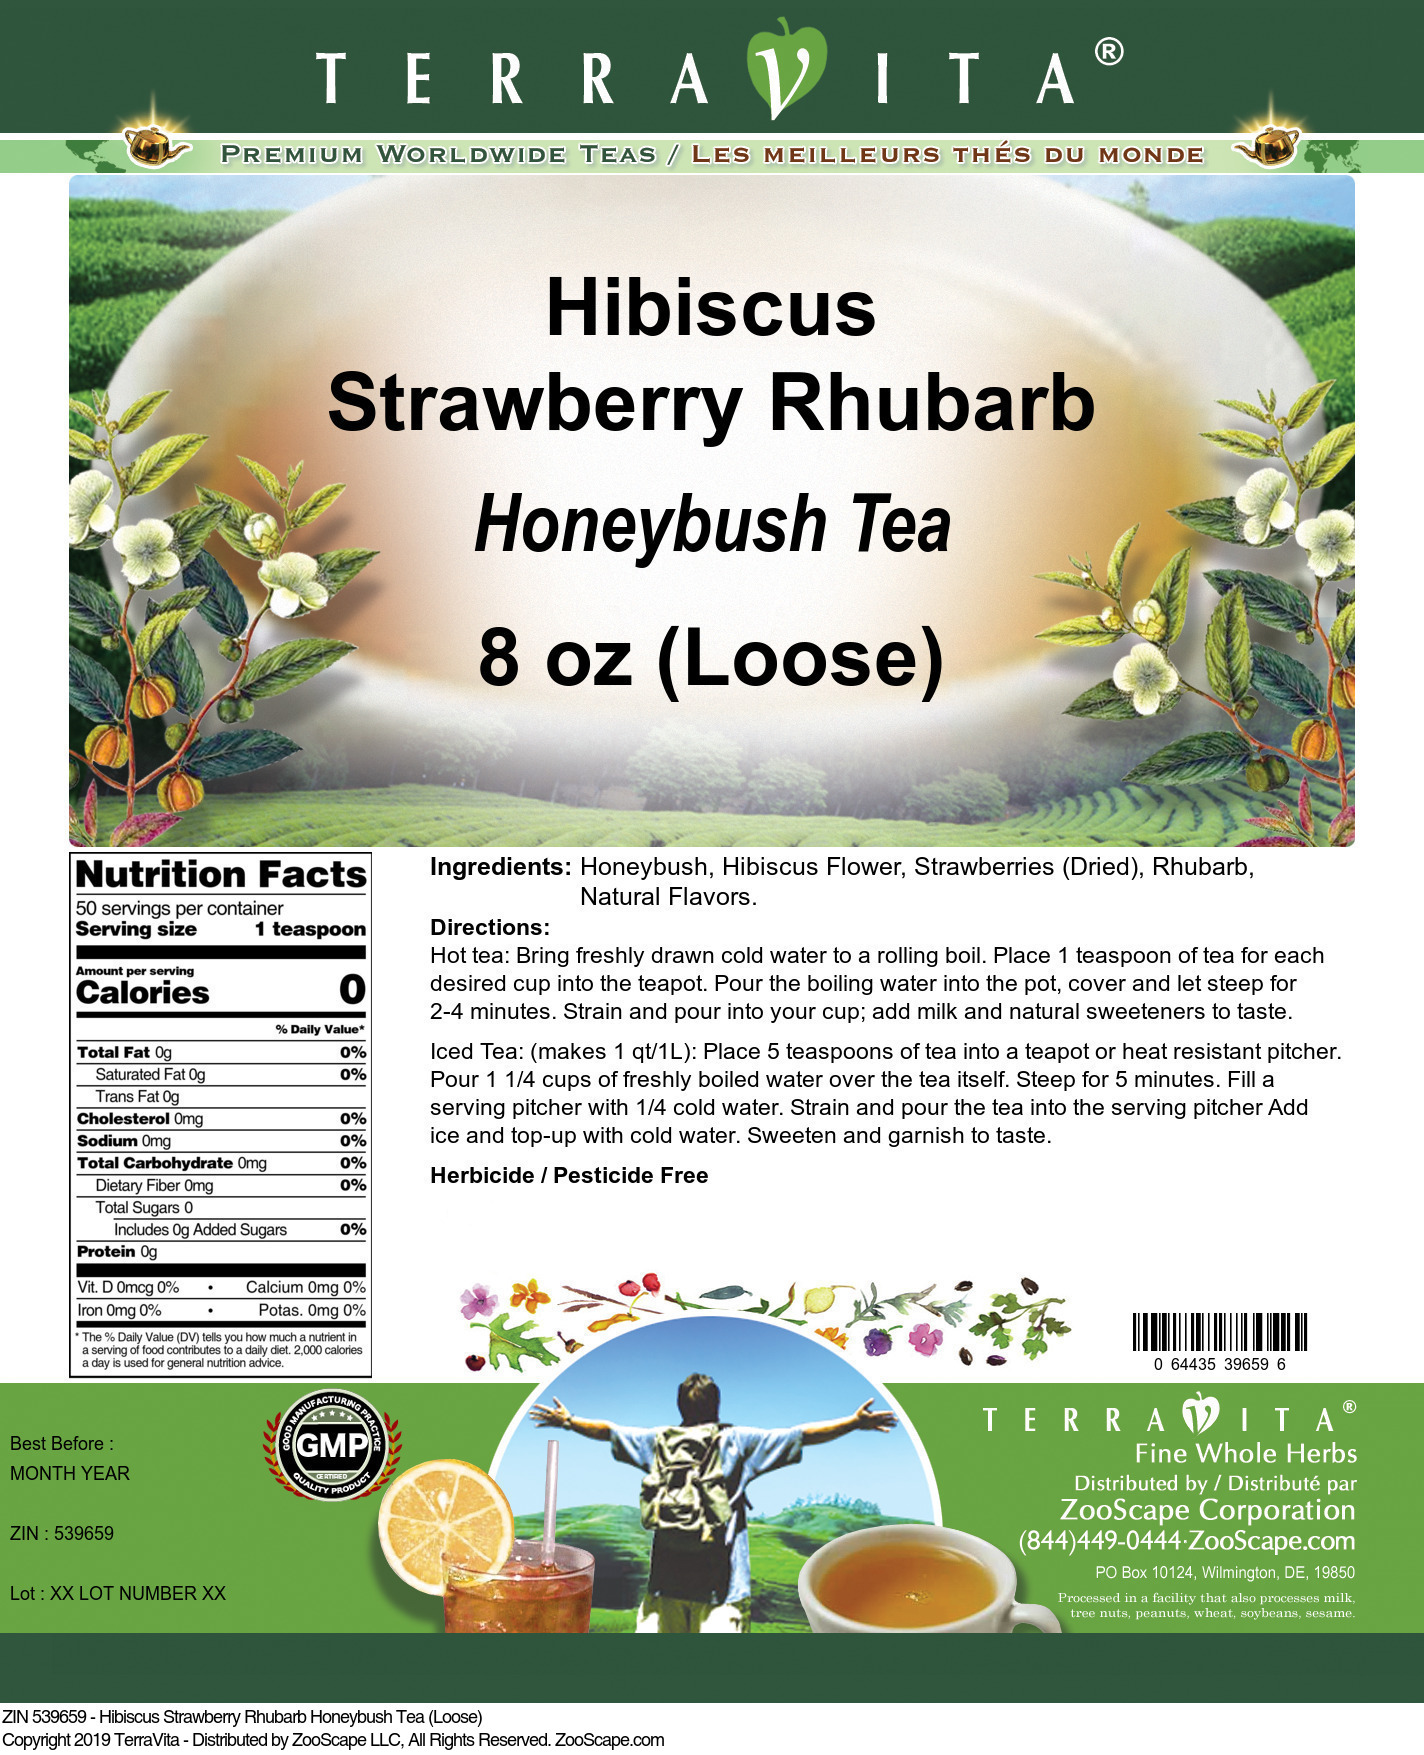 Hibiscus Strawberry Rhubarb Honeybush Tea (Loose) - Label